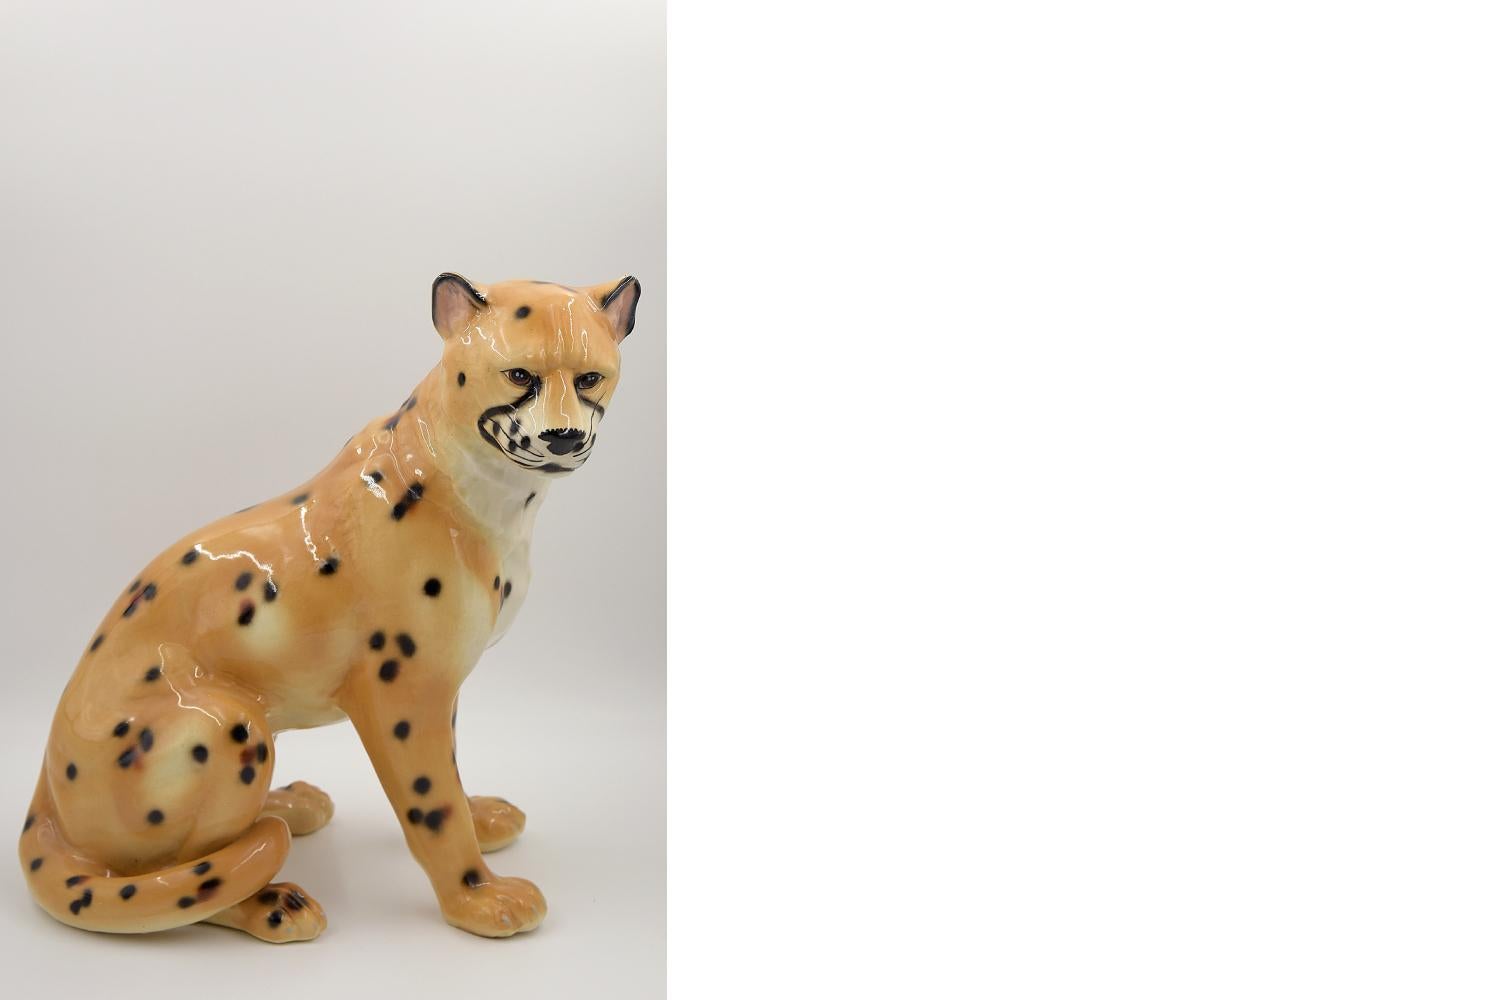 Painted Original Vintage Mid-Century Italian Modern Ceramic Cheetah Sculpture, 1970s